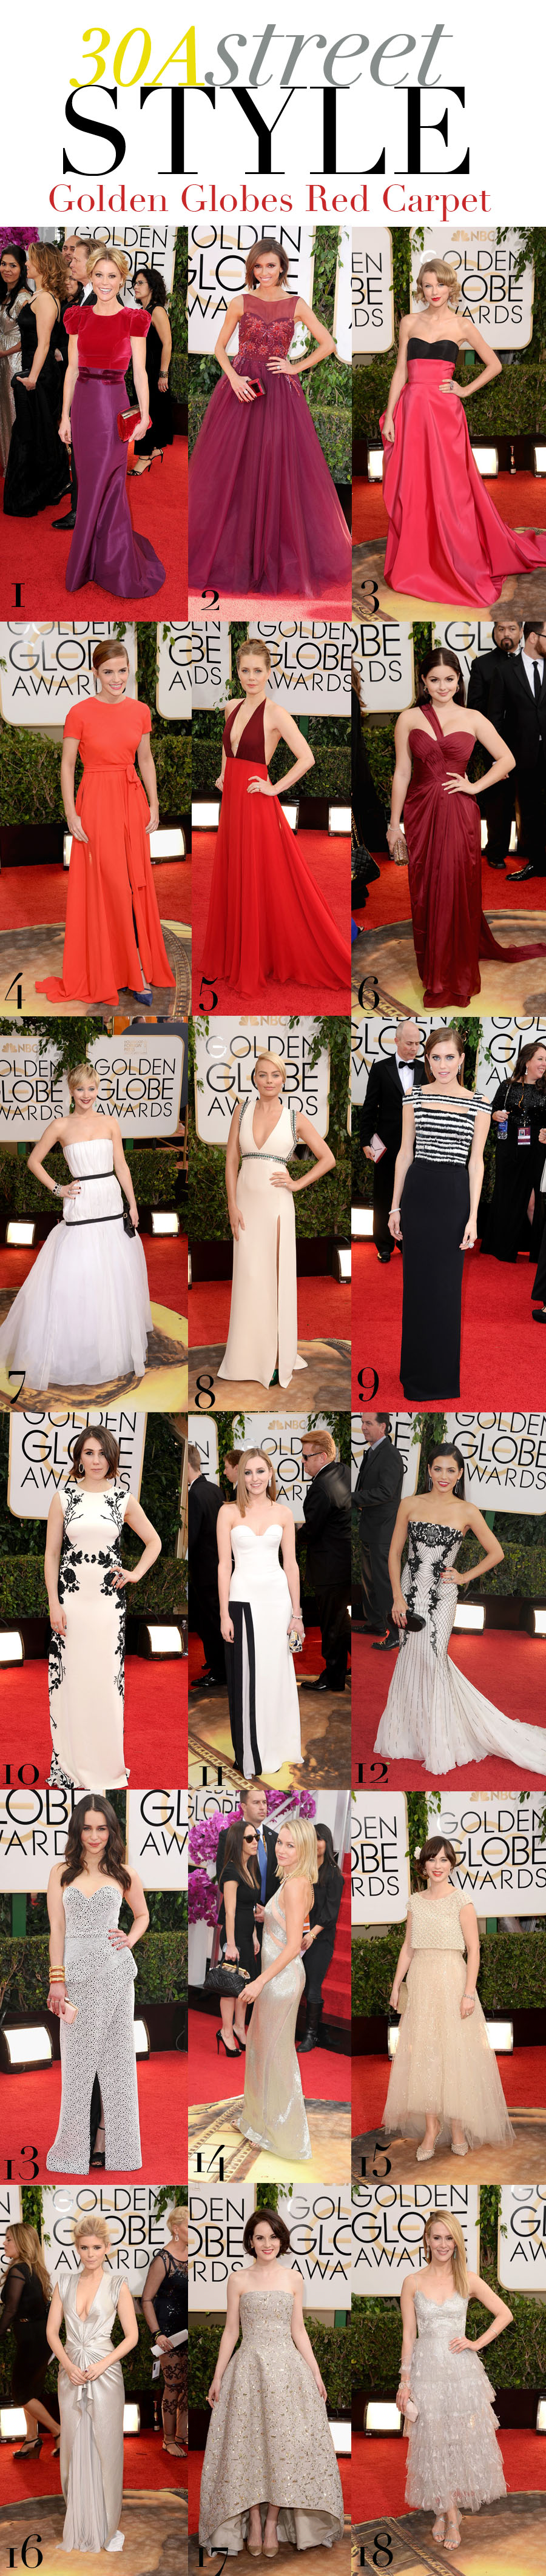 Red Carpet Recap - Golden Globes 2014